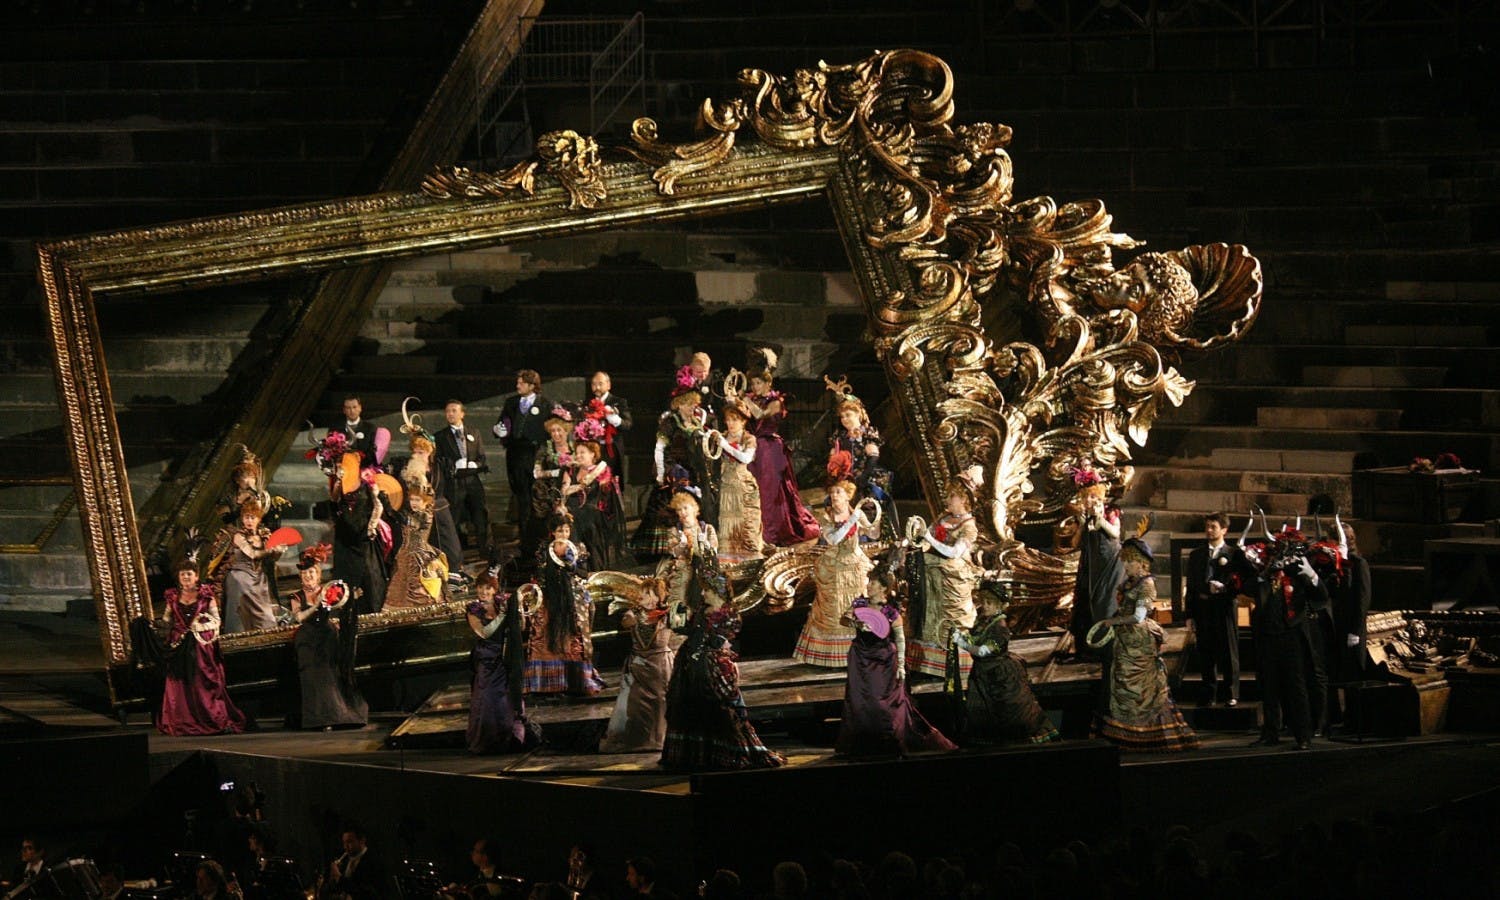 verona-arena-festival-la-traviata-opera-tickets_header-27860.jpeg